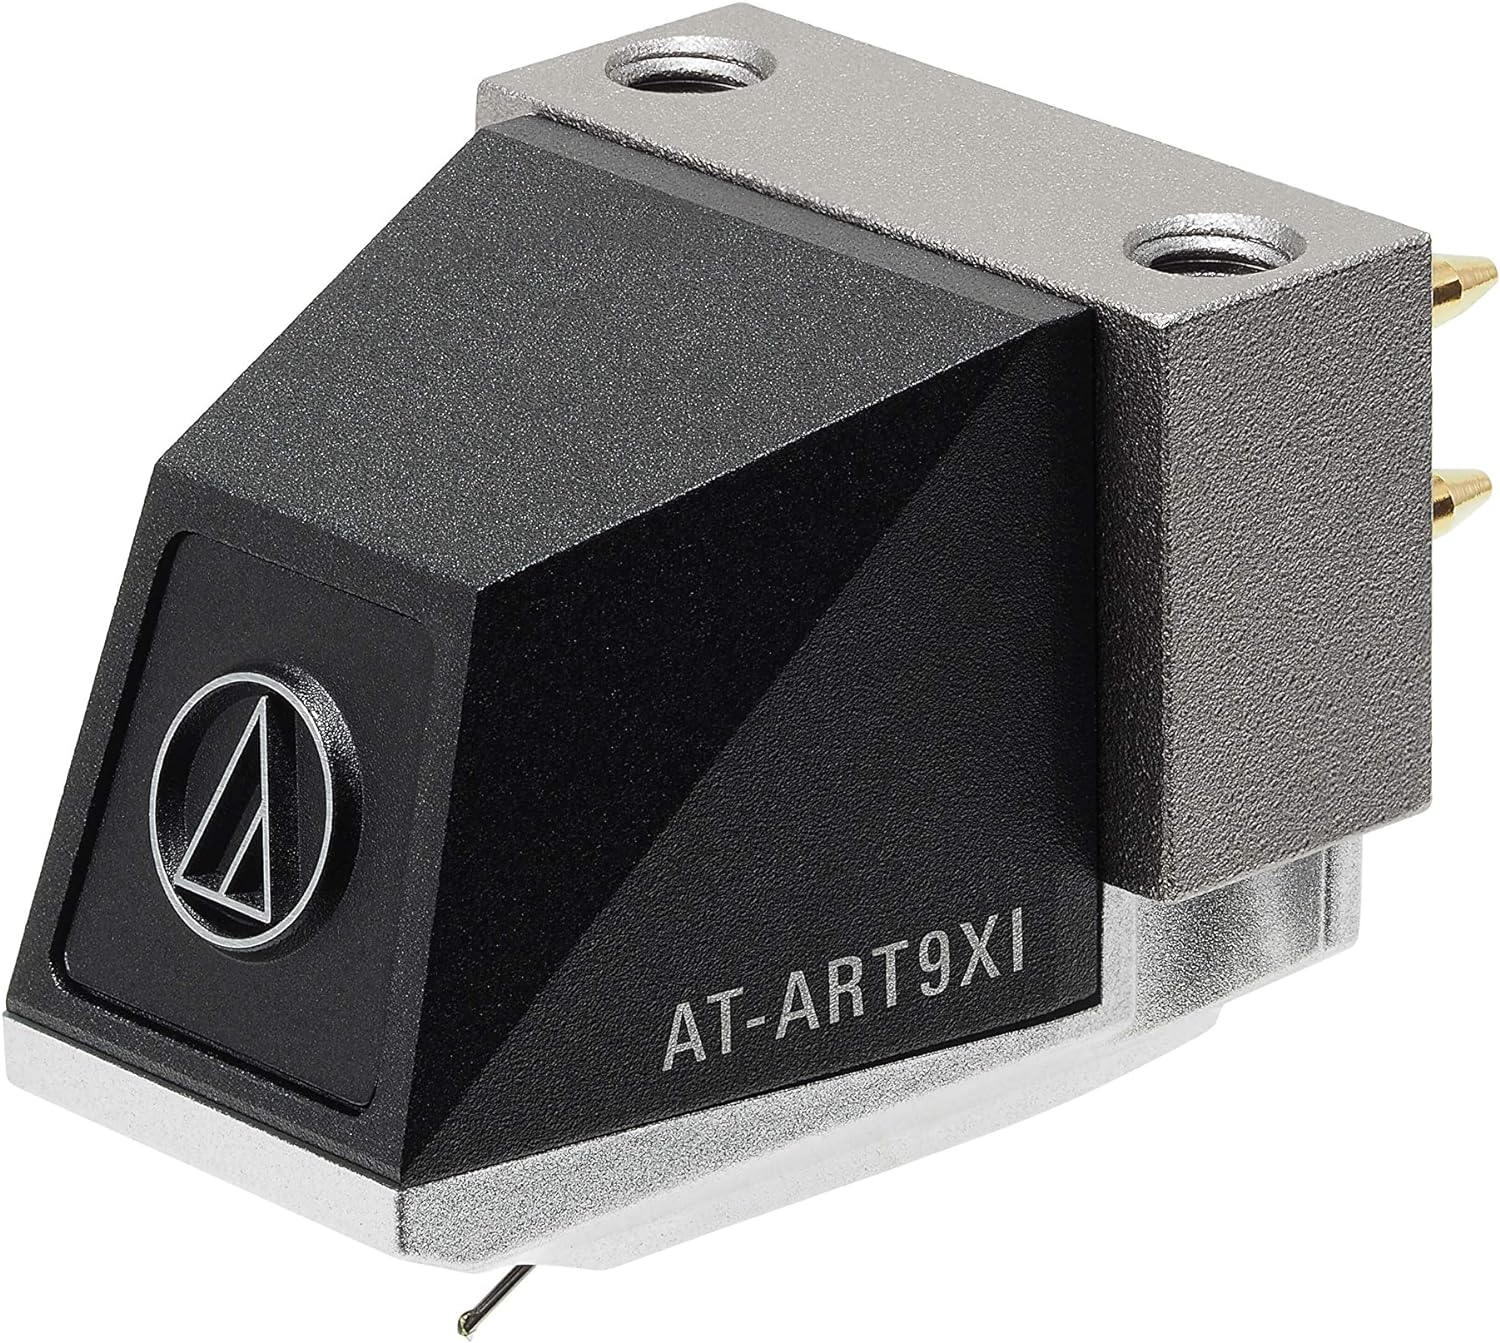  Audio Technica AT-ART9XI MC cartridge stereo iron core type stylus cartridge record player parallel import 